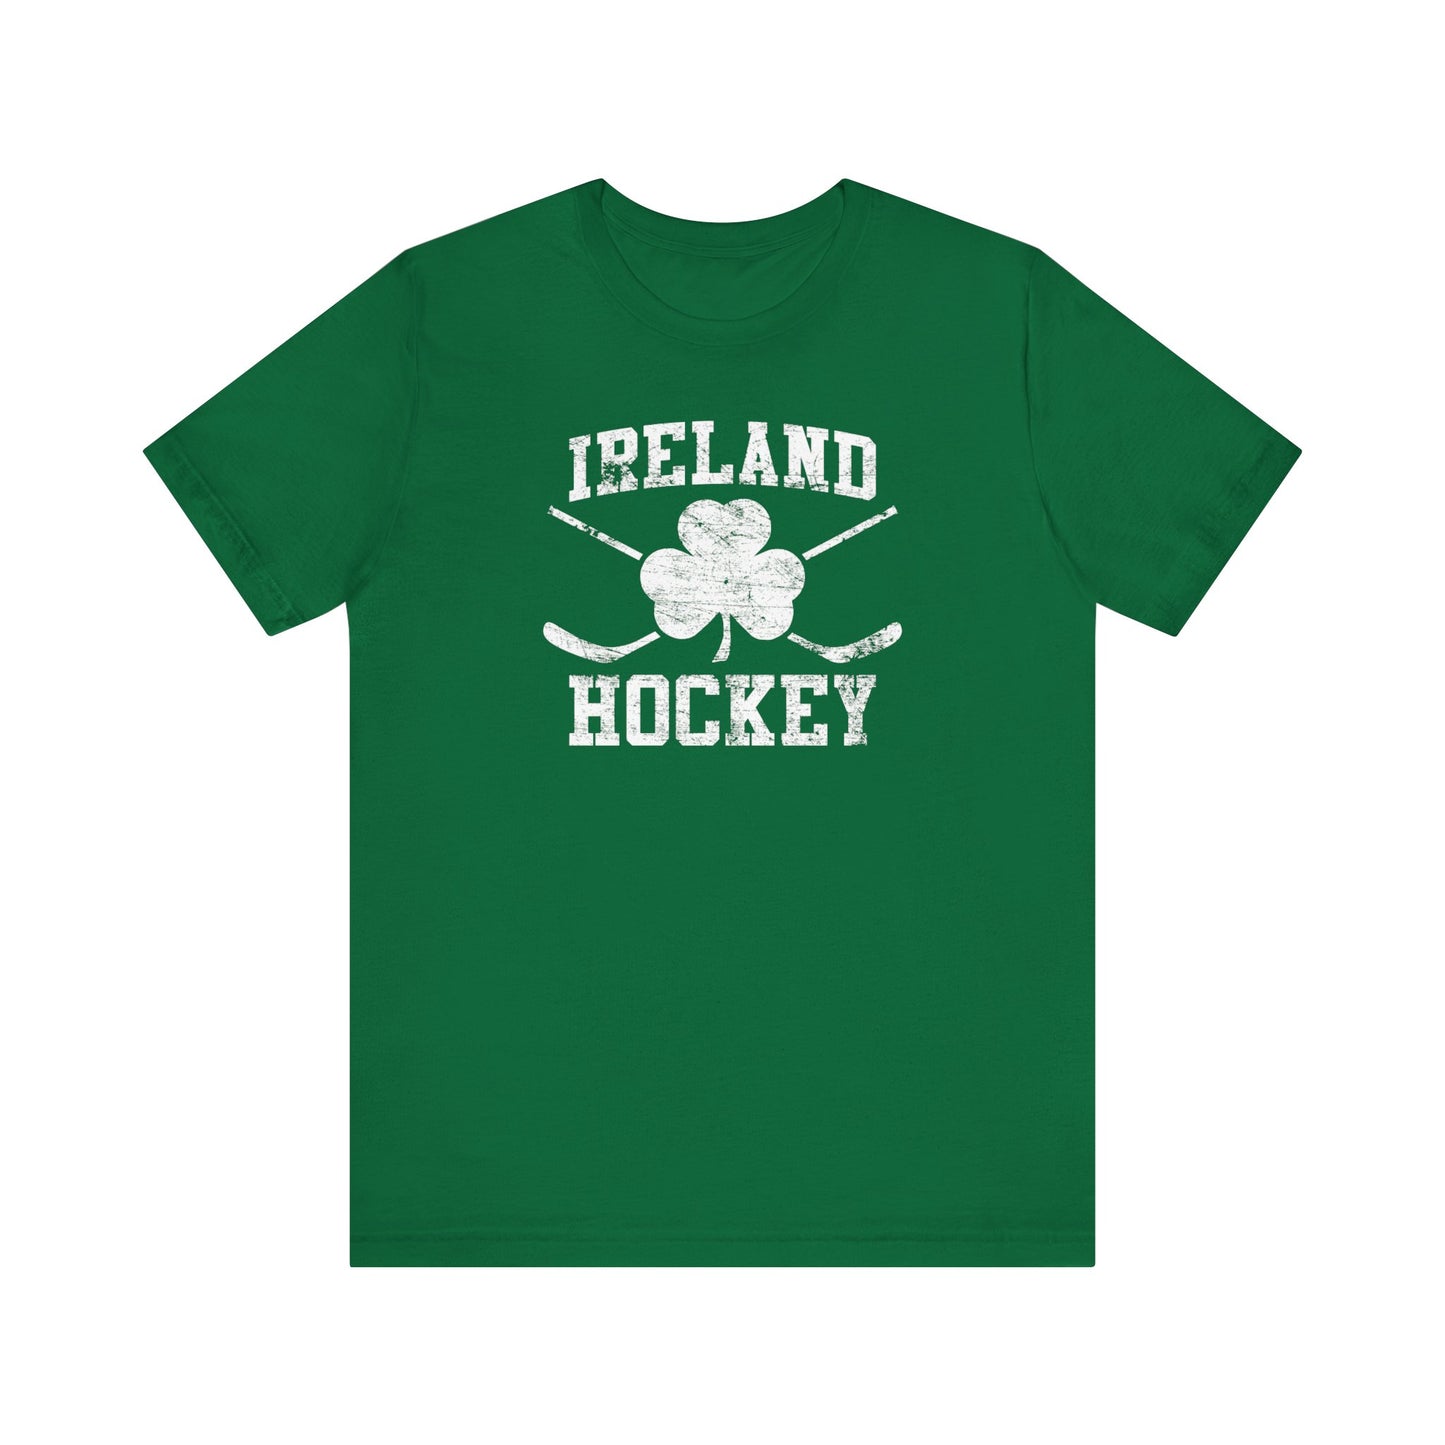 Ireland Hockey Shirt